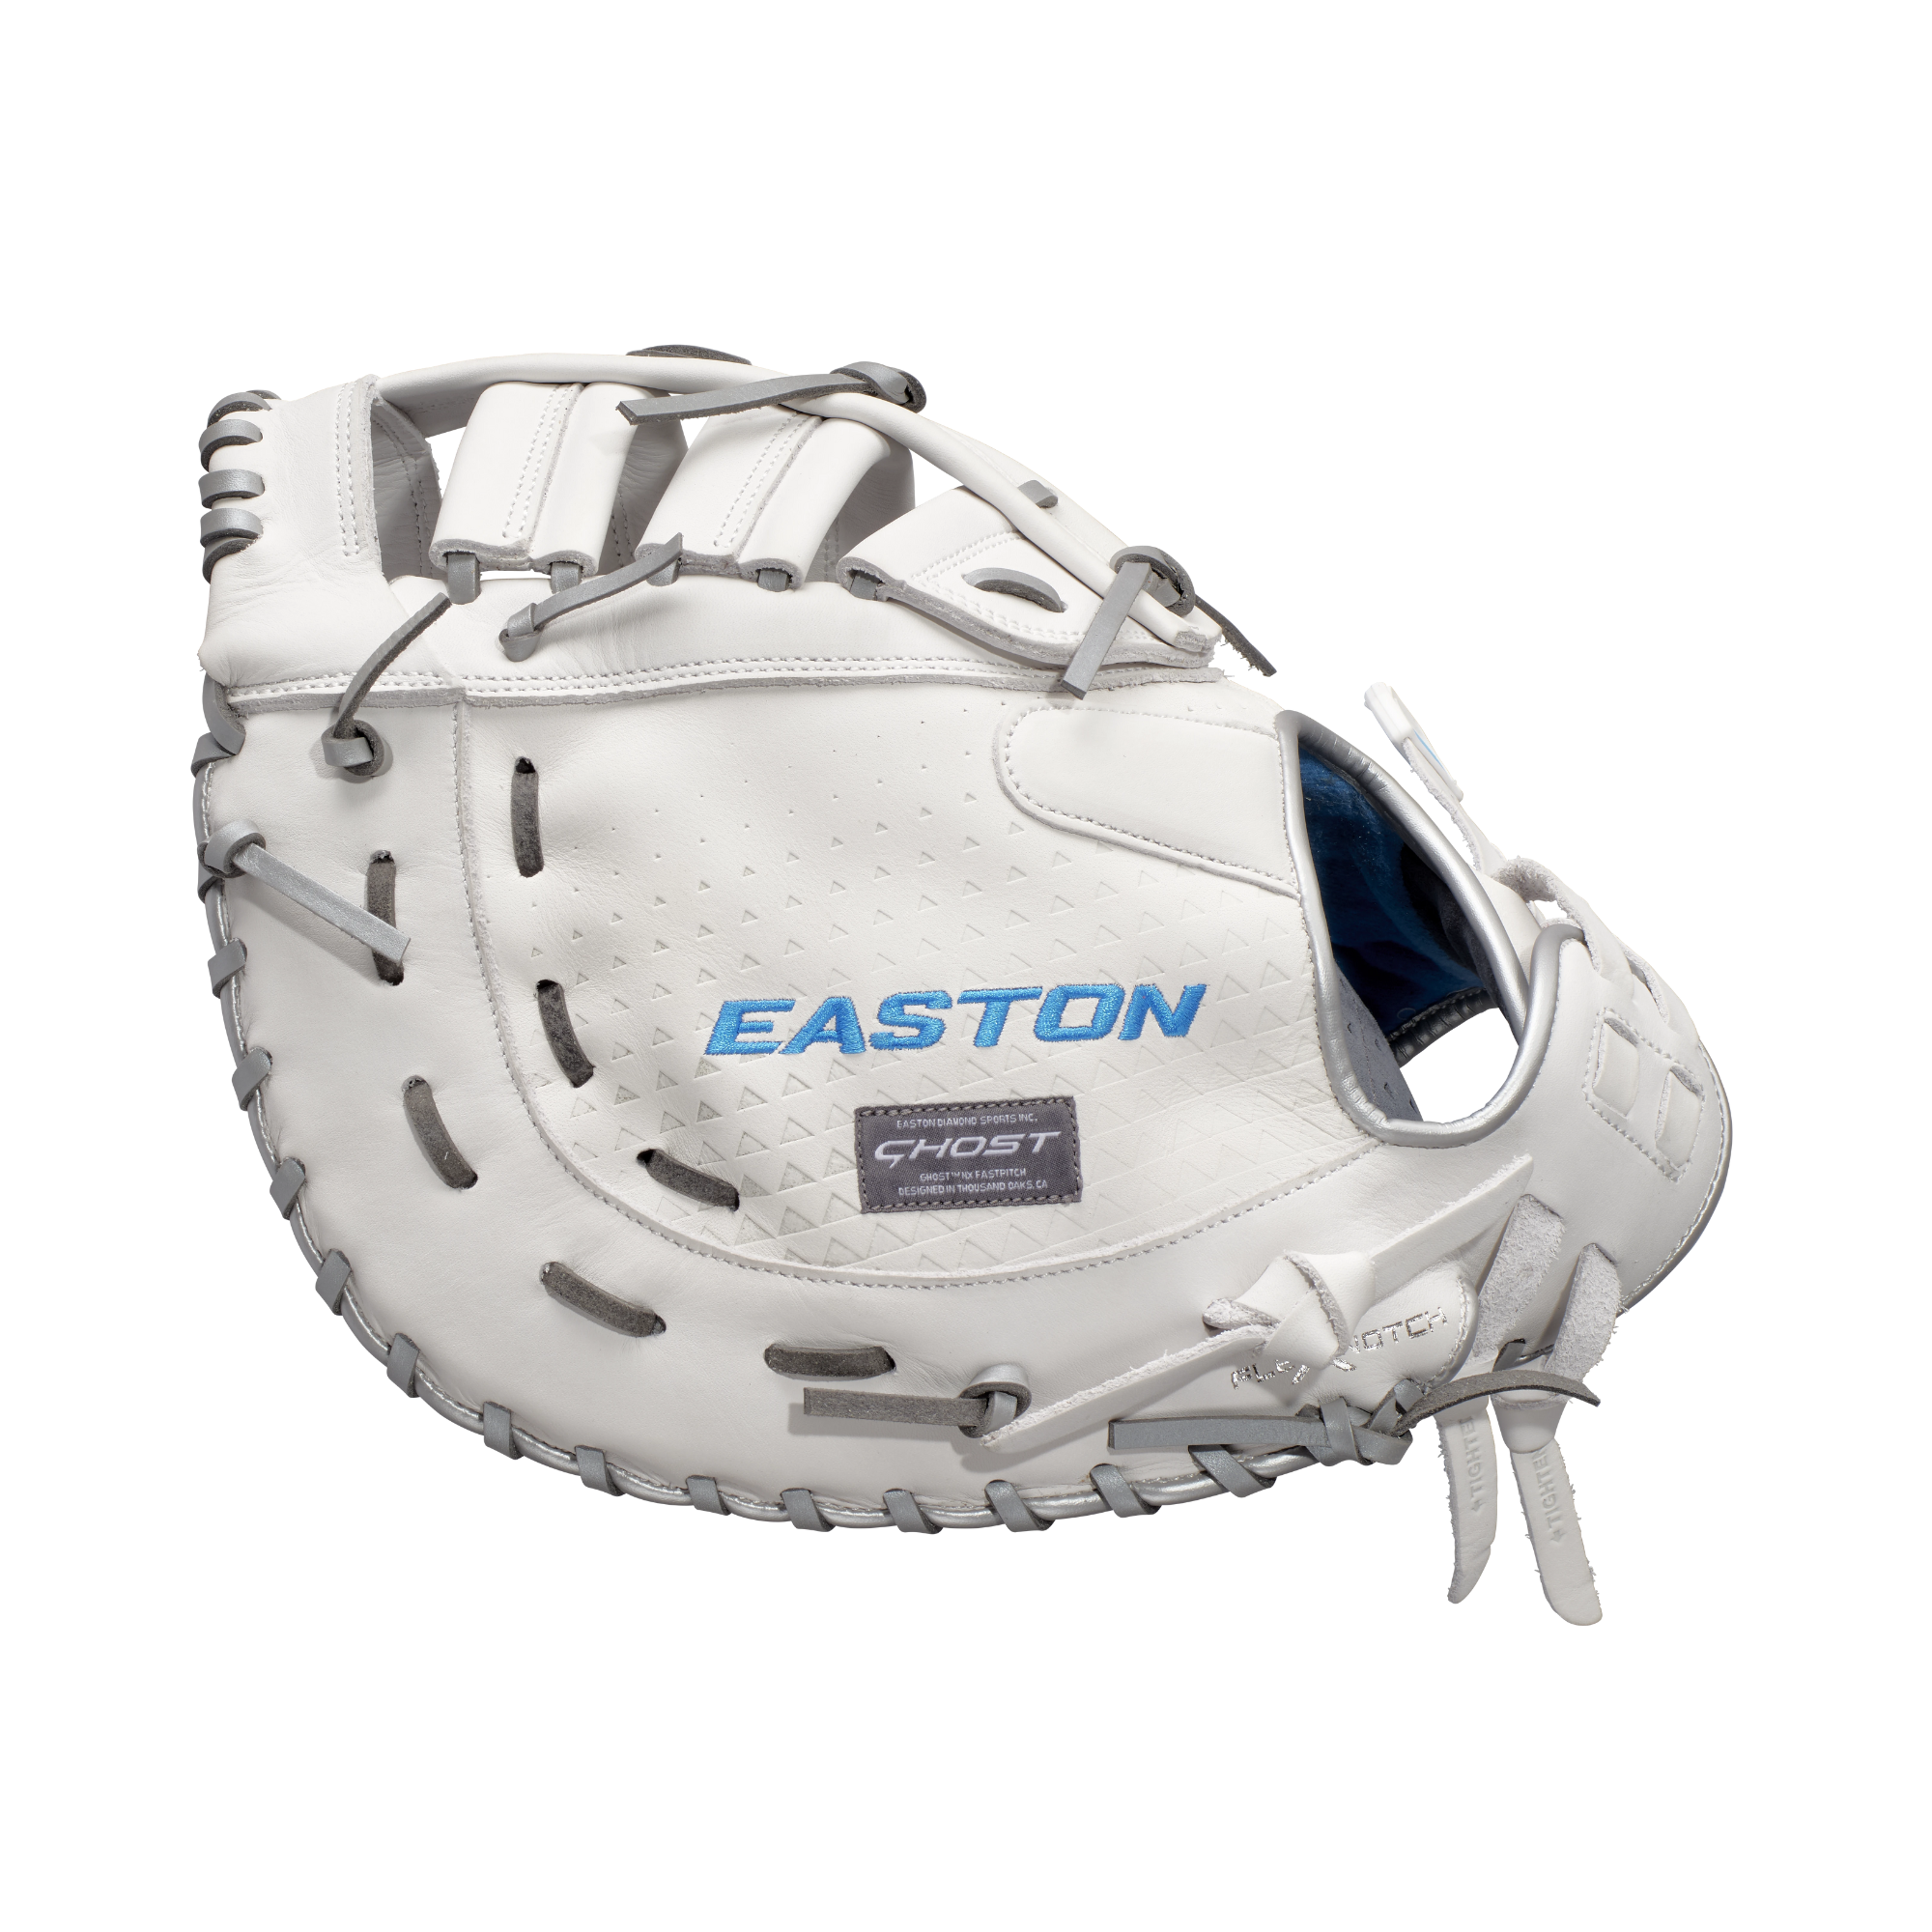 Easton Ghost NX FP Series-First Base Mitt Softball Glove 13" RHT